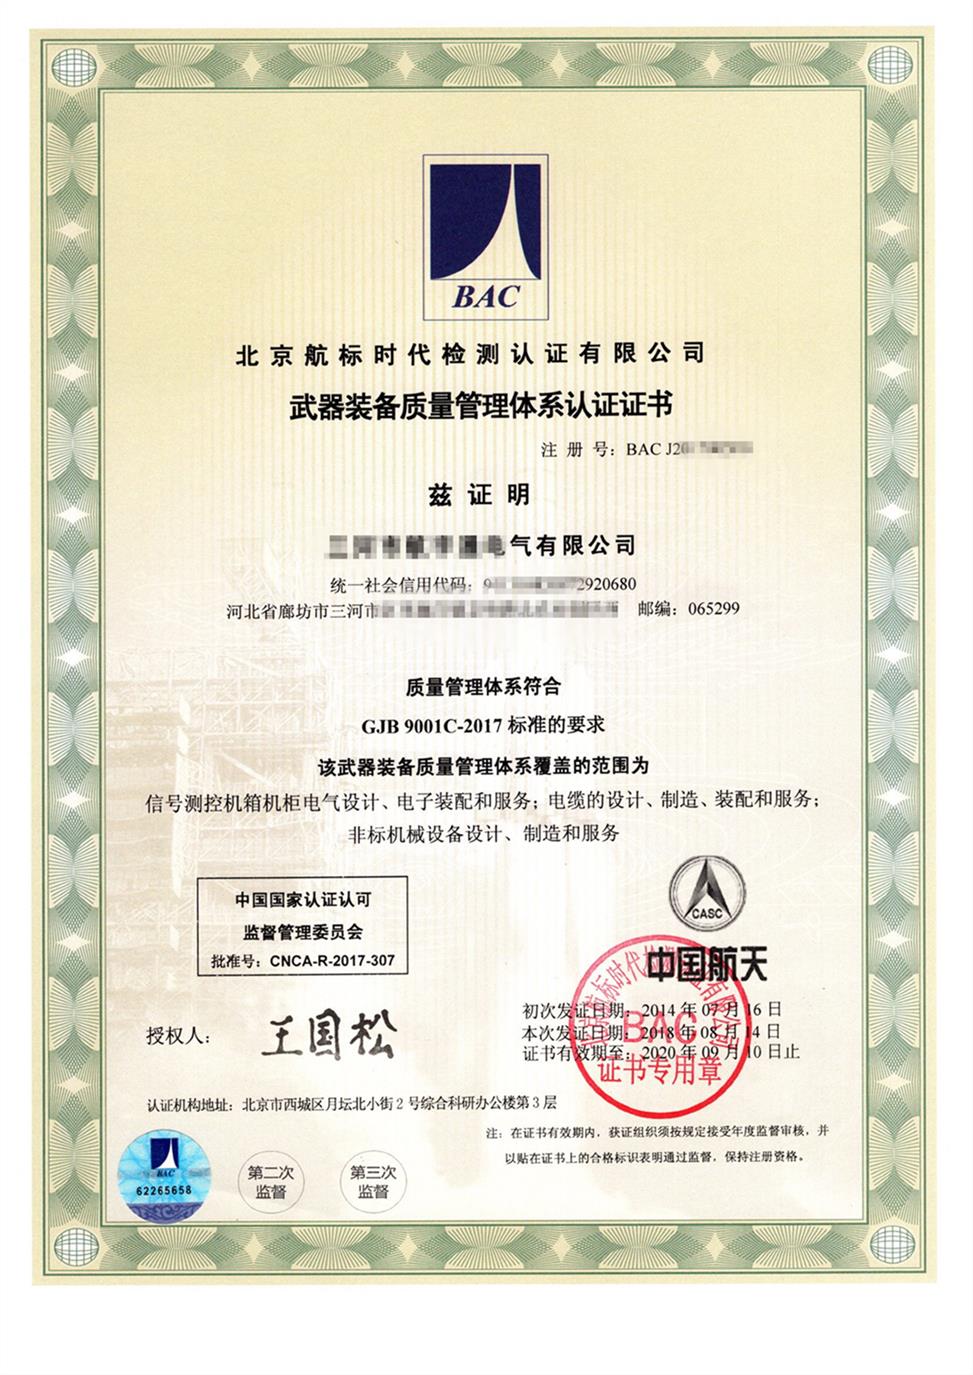 衢州iso27001认证流程